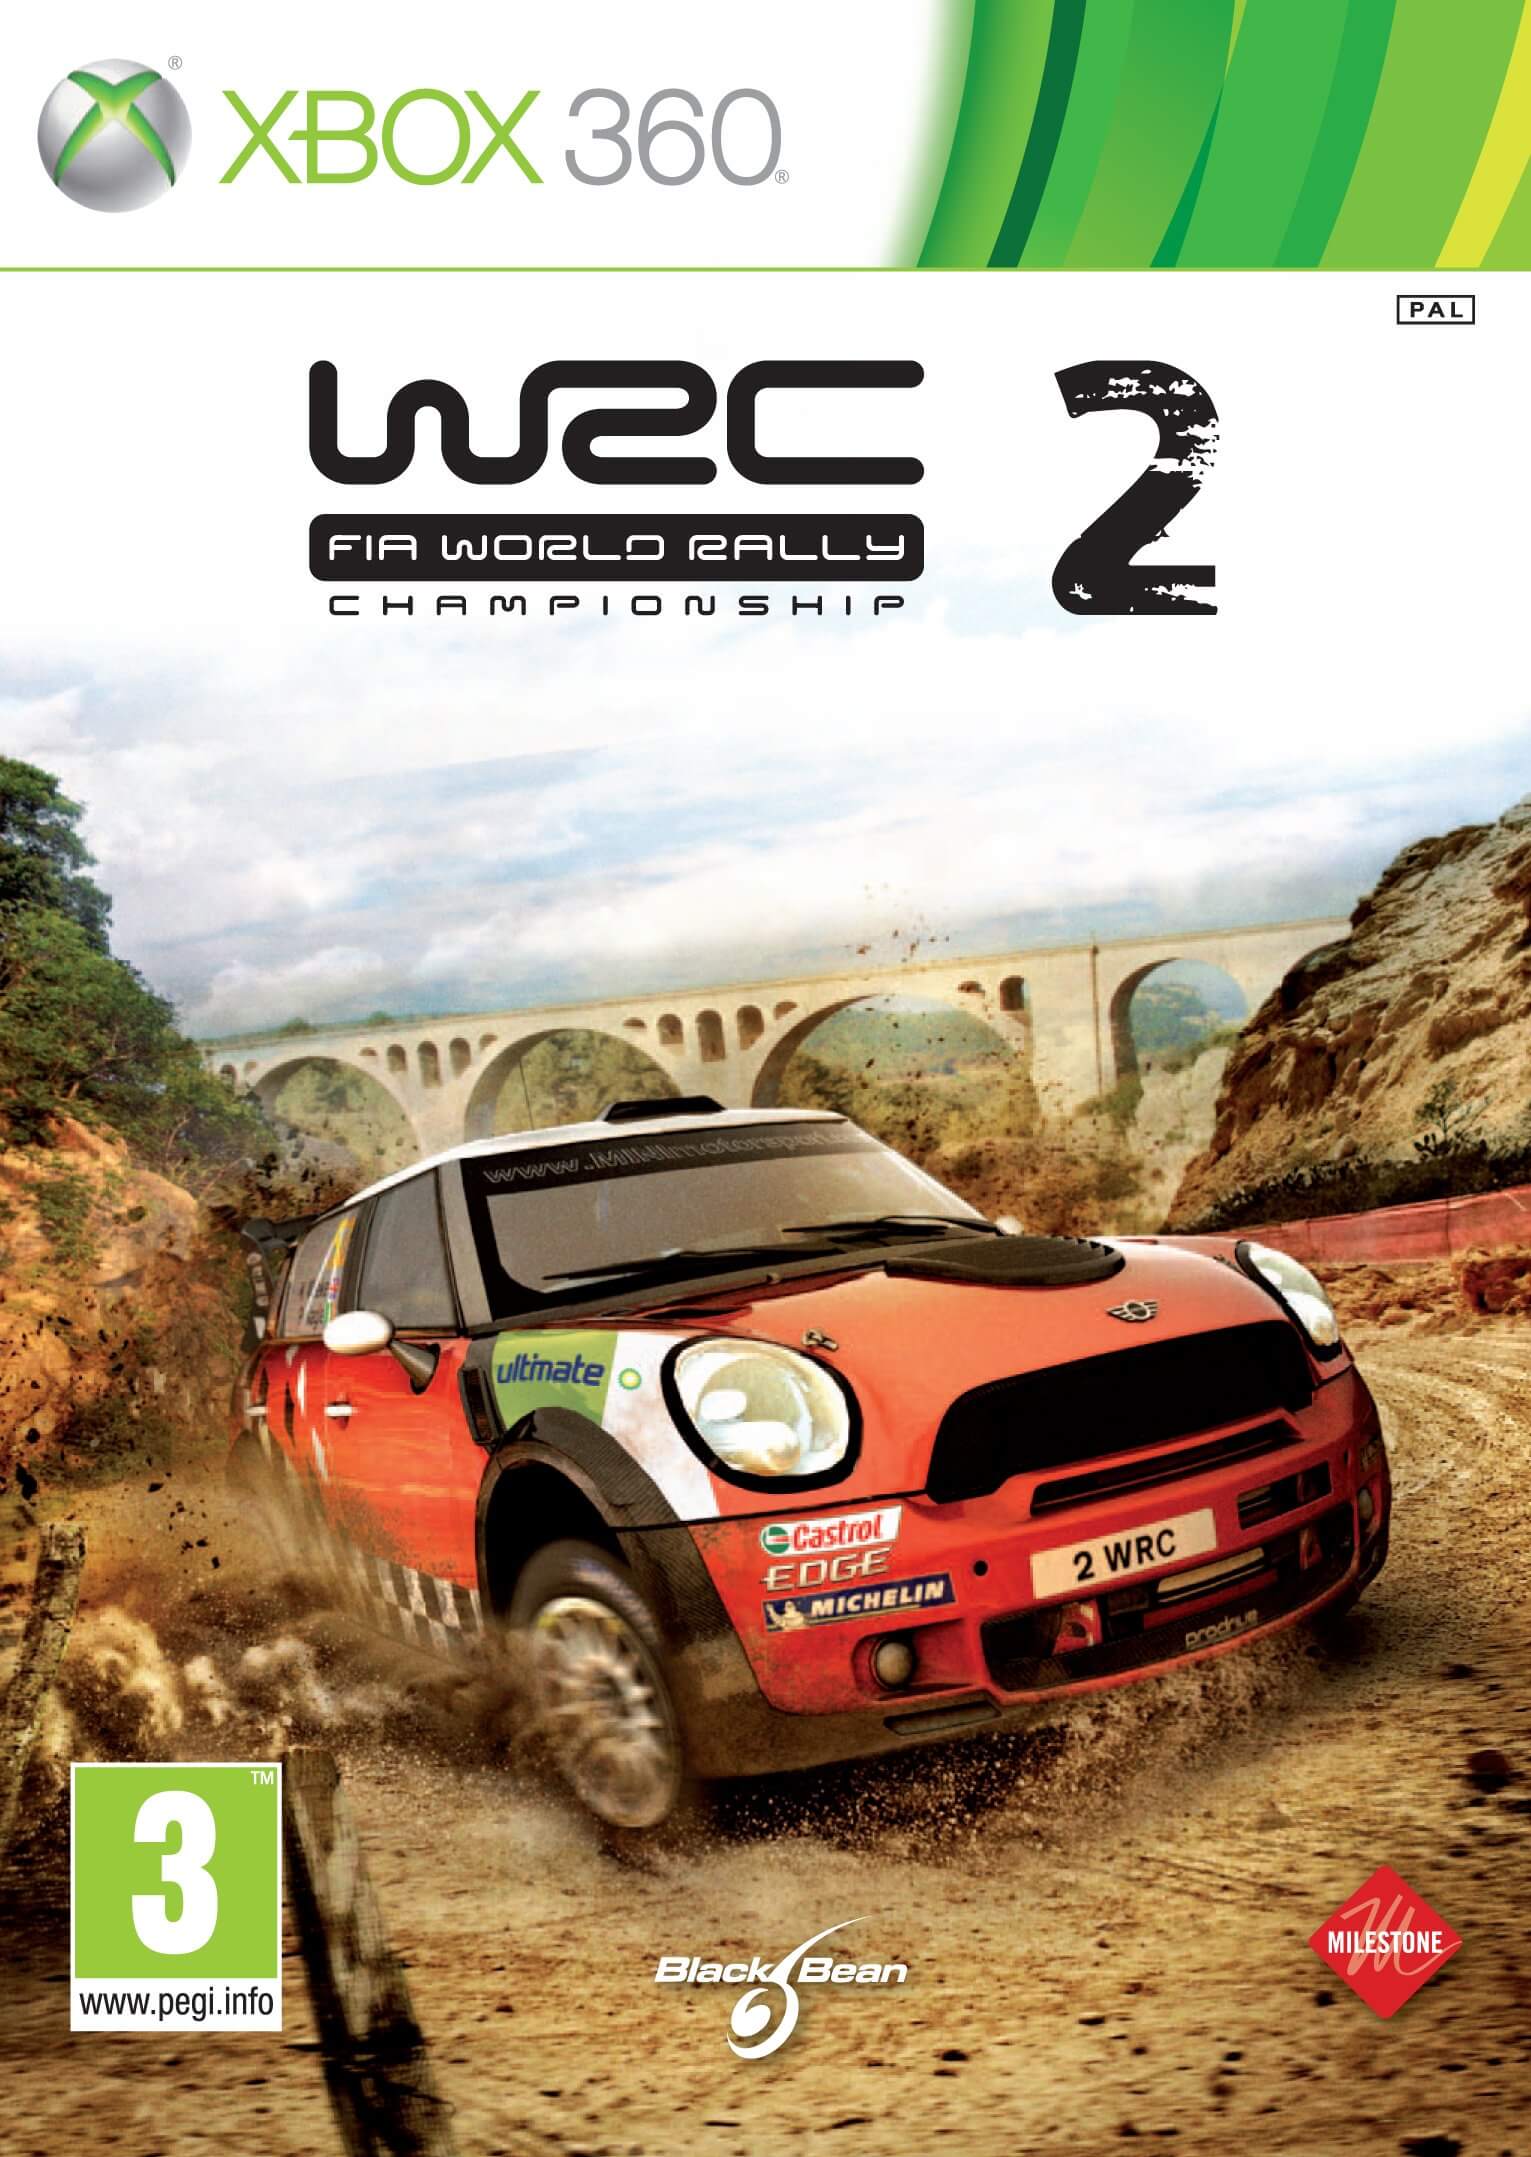 WRC 2 FIA World Rally Championshipionship